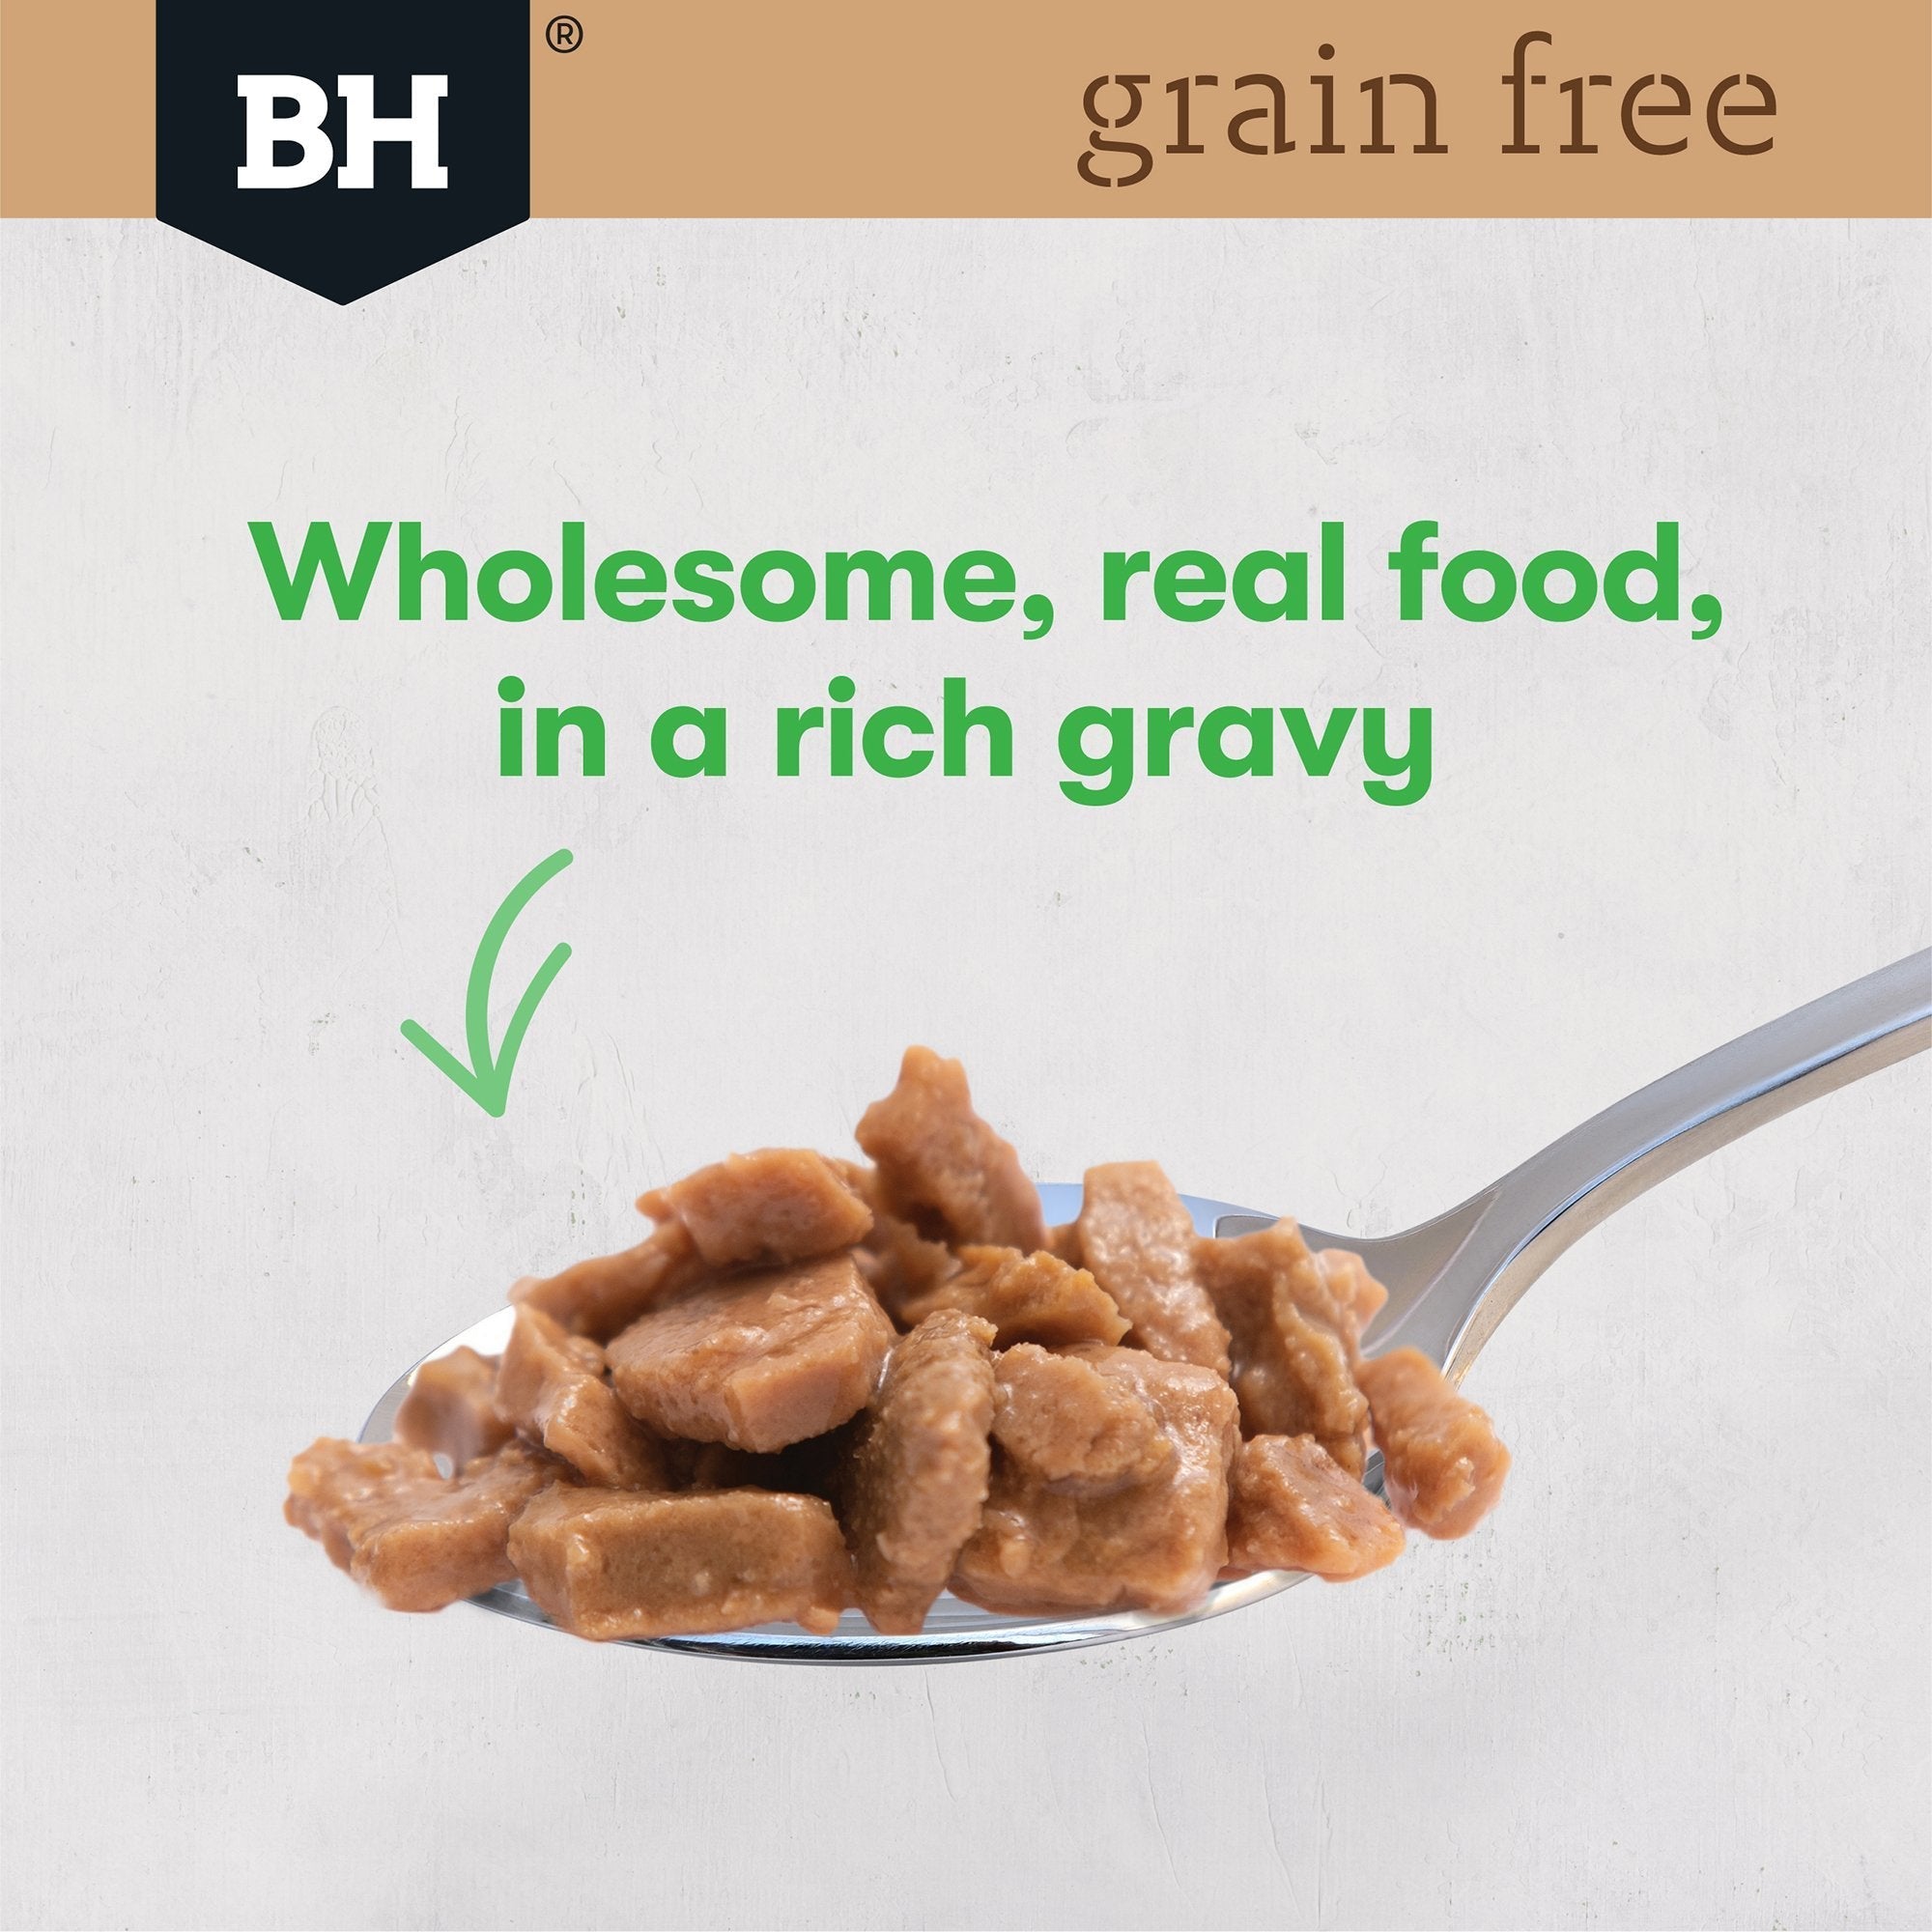 Black Hawk Grain Free Kitten Chicken With Peas Broth And Gravy Wet Cat Food Pouches 85G